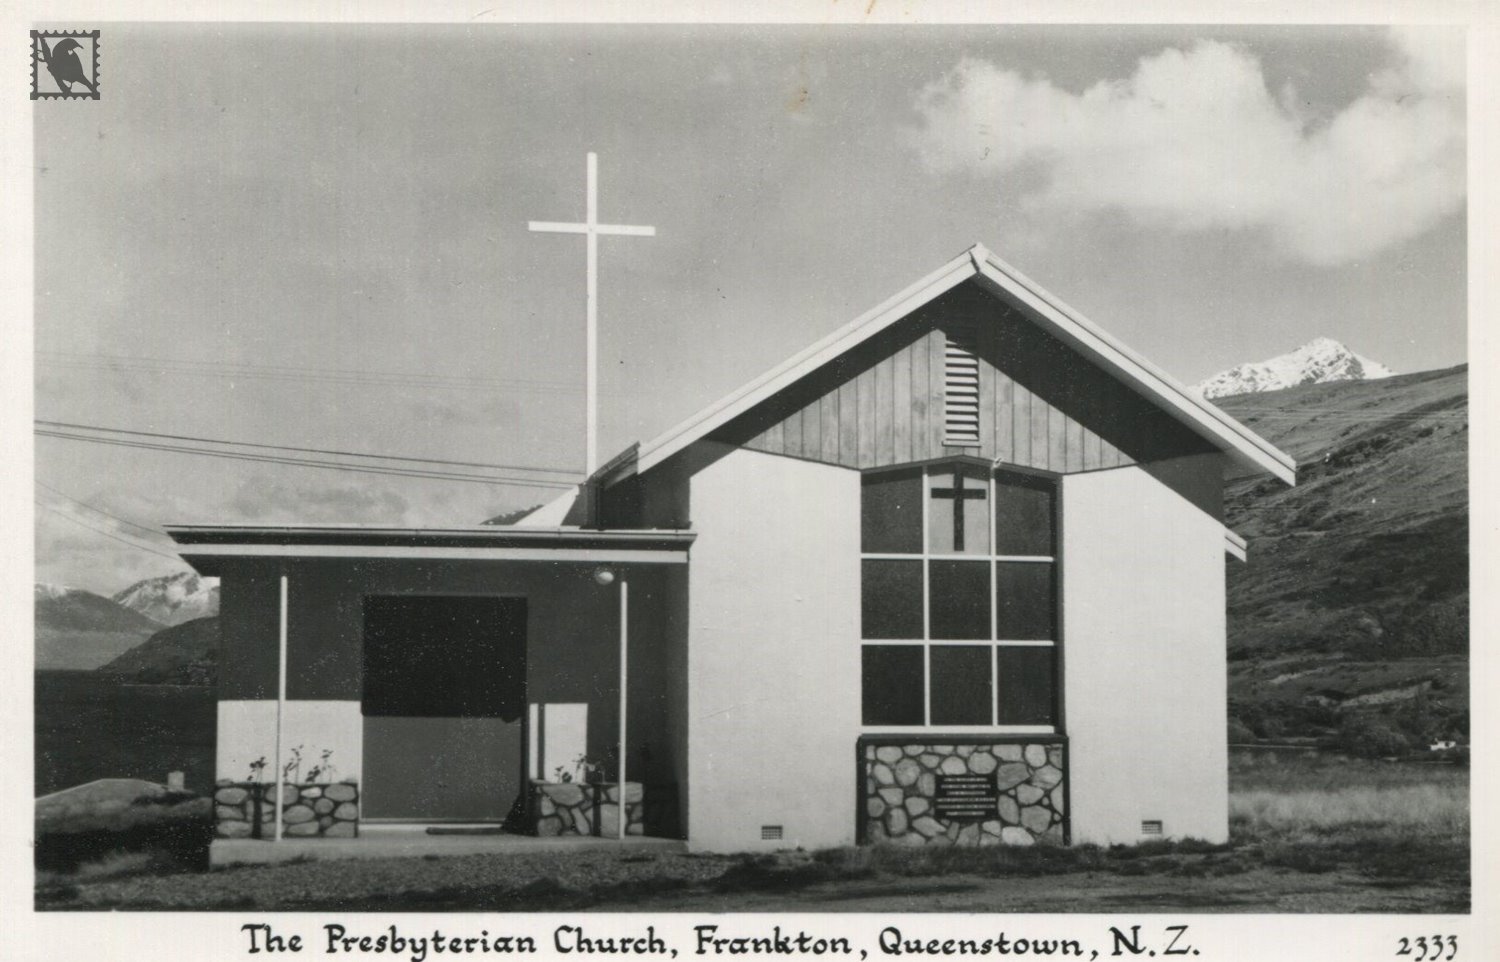 Queenstown-Frankton The Presbyterian Church